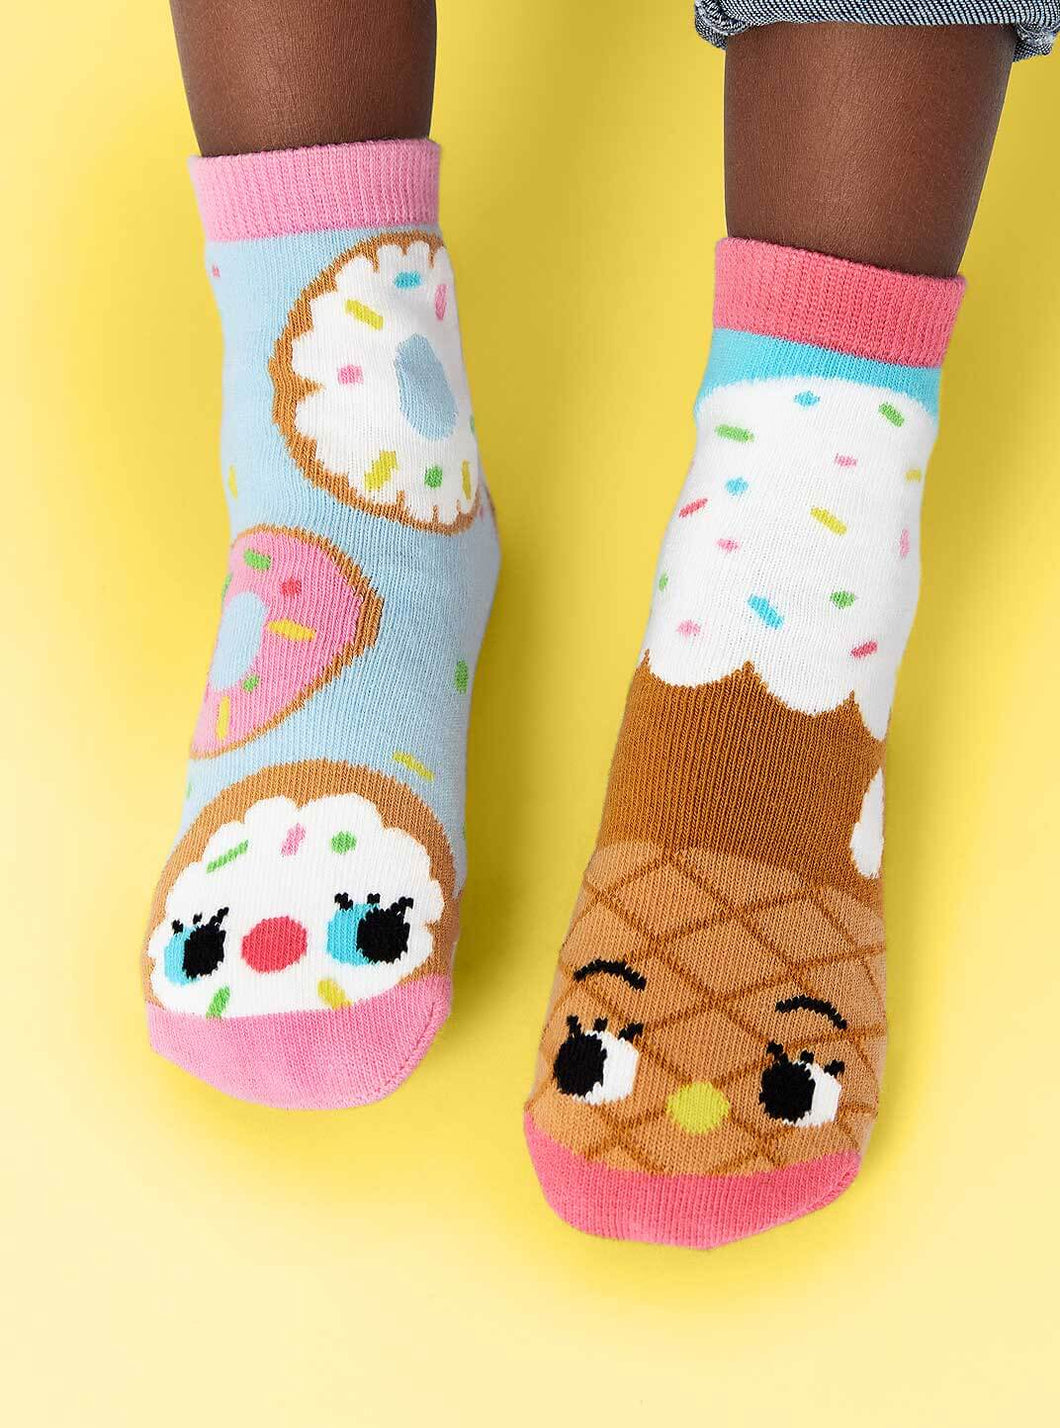 Donut & Ice Cream Socks